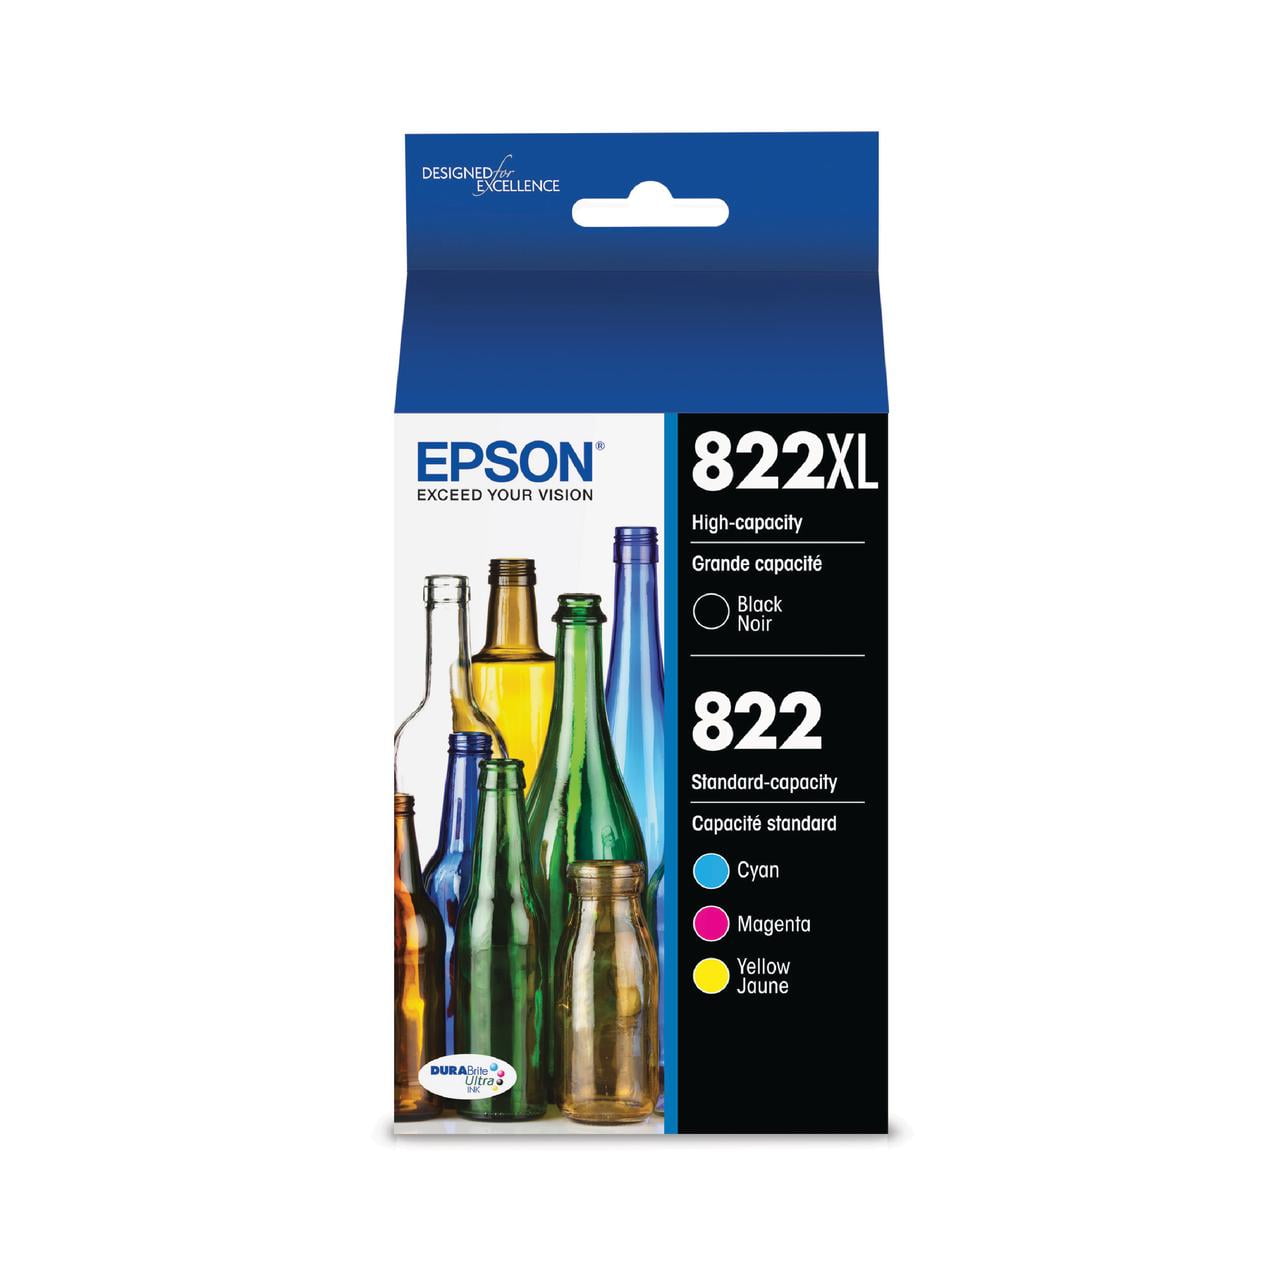 EPSON T822 DURABrite Ultra Genuine Ink High Capacity Black & Standard Color Cartridge Combo Pack